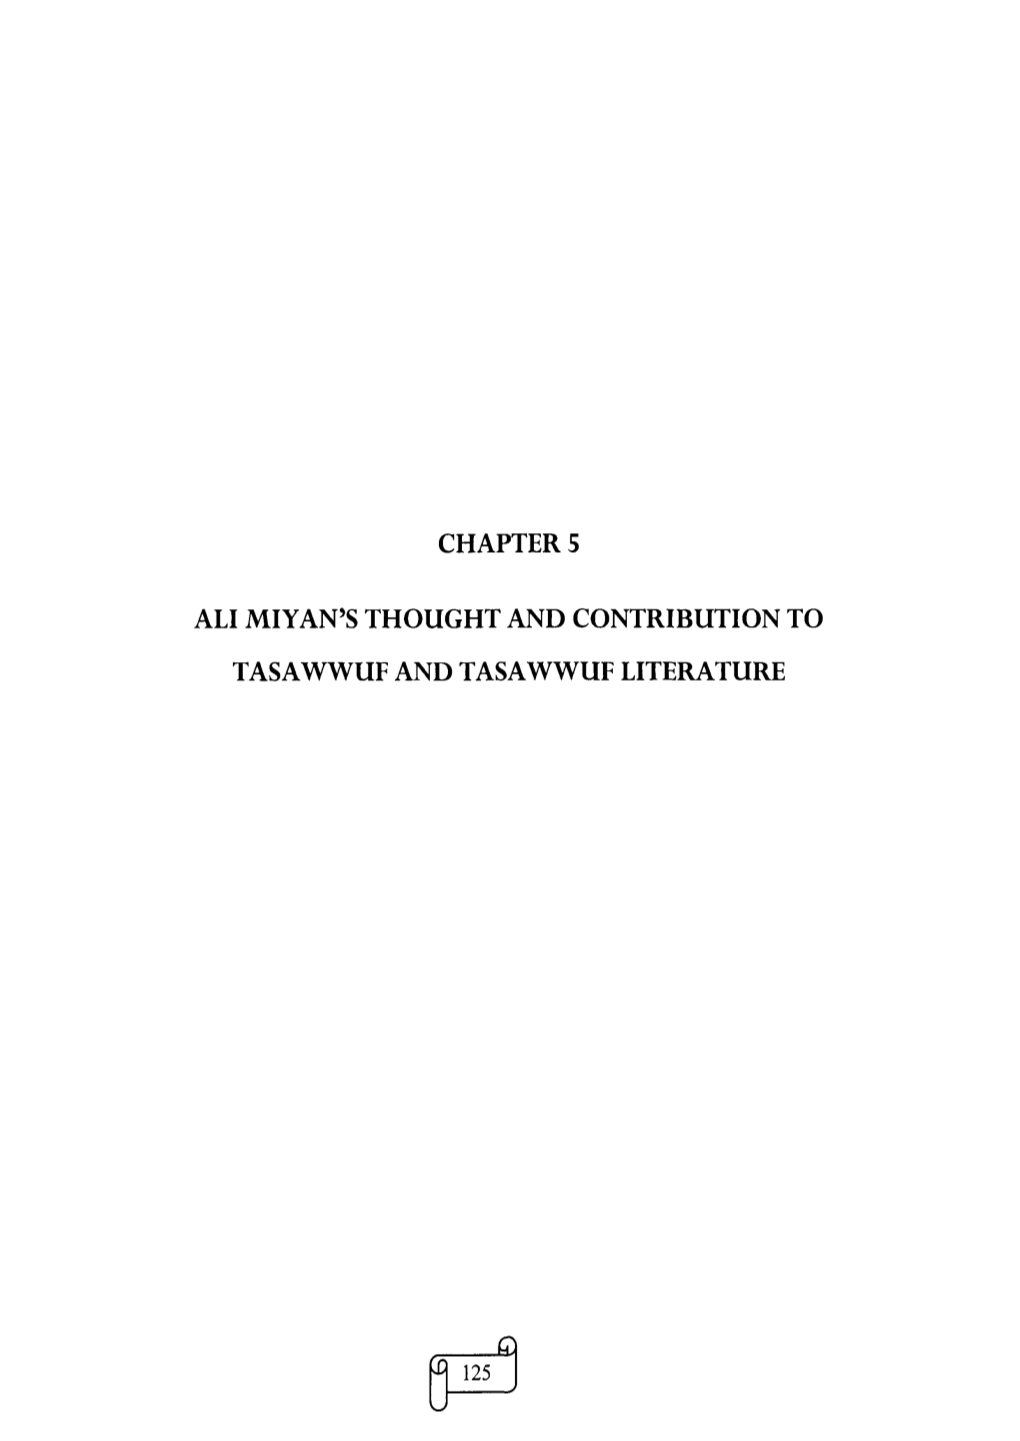 Tasawwuf and Tasawwuf Literature